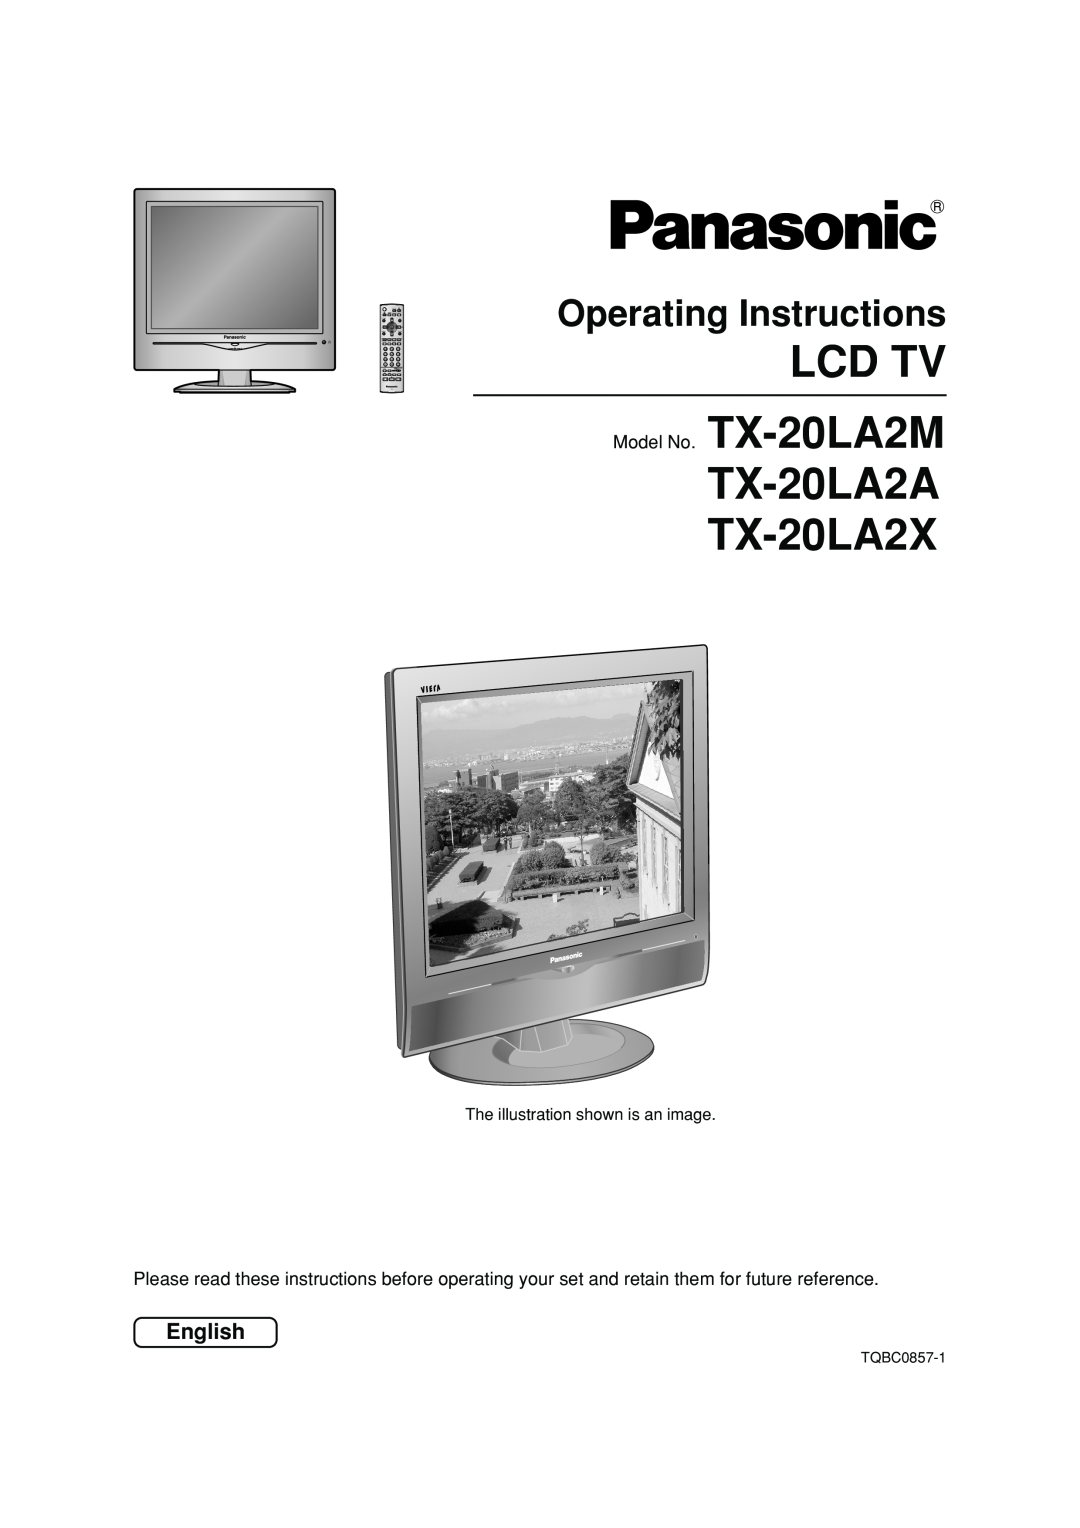 Panasonic manual Lcd Tv, TX-20LA2A TX-20LA2X, Operating Instructions, English, Model No. TX-20LA2M, TQBC0857-1 